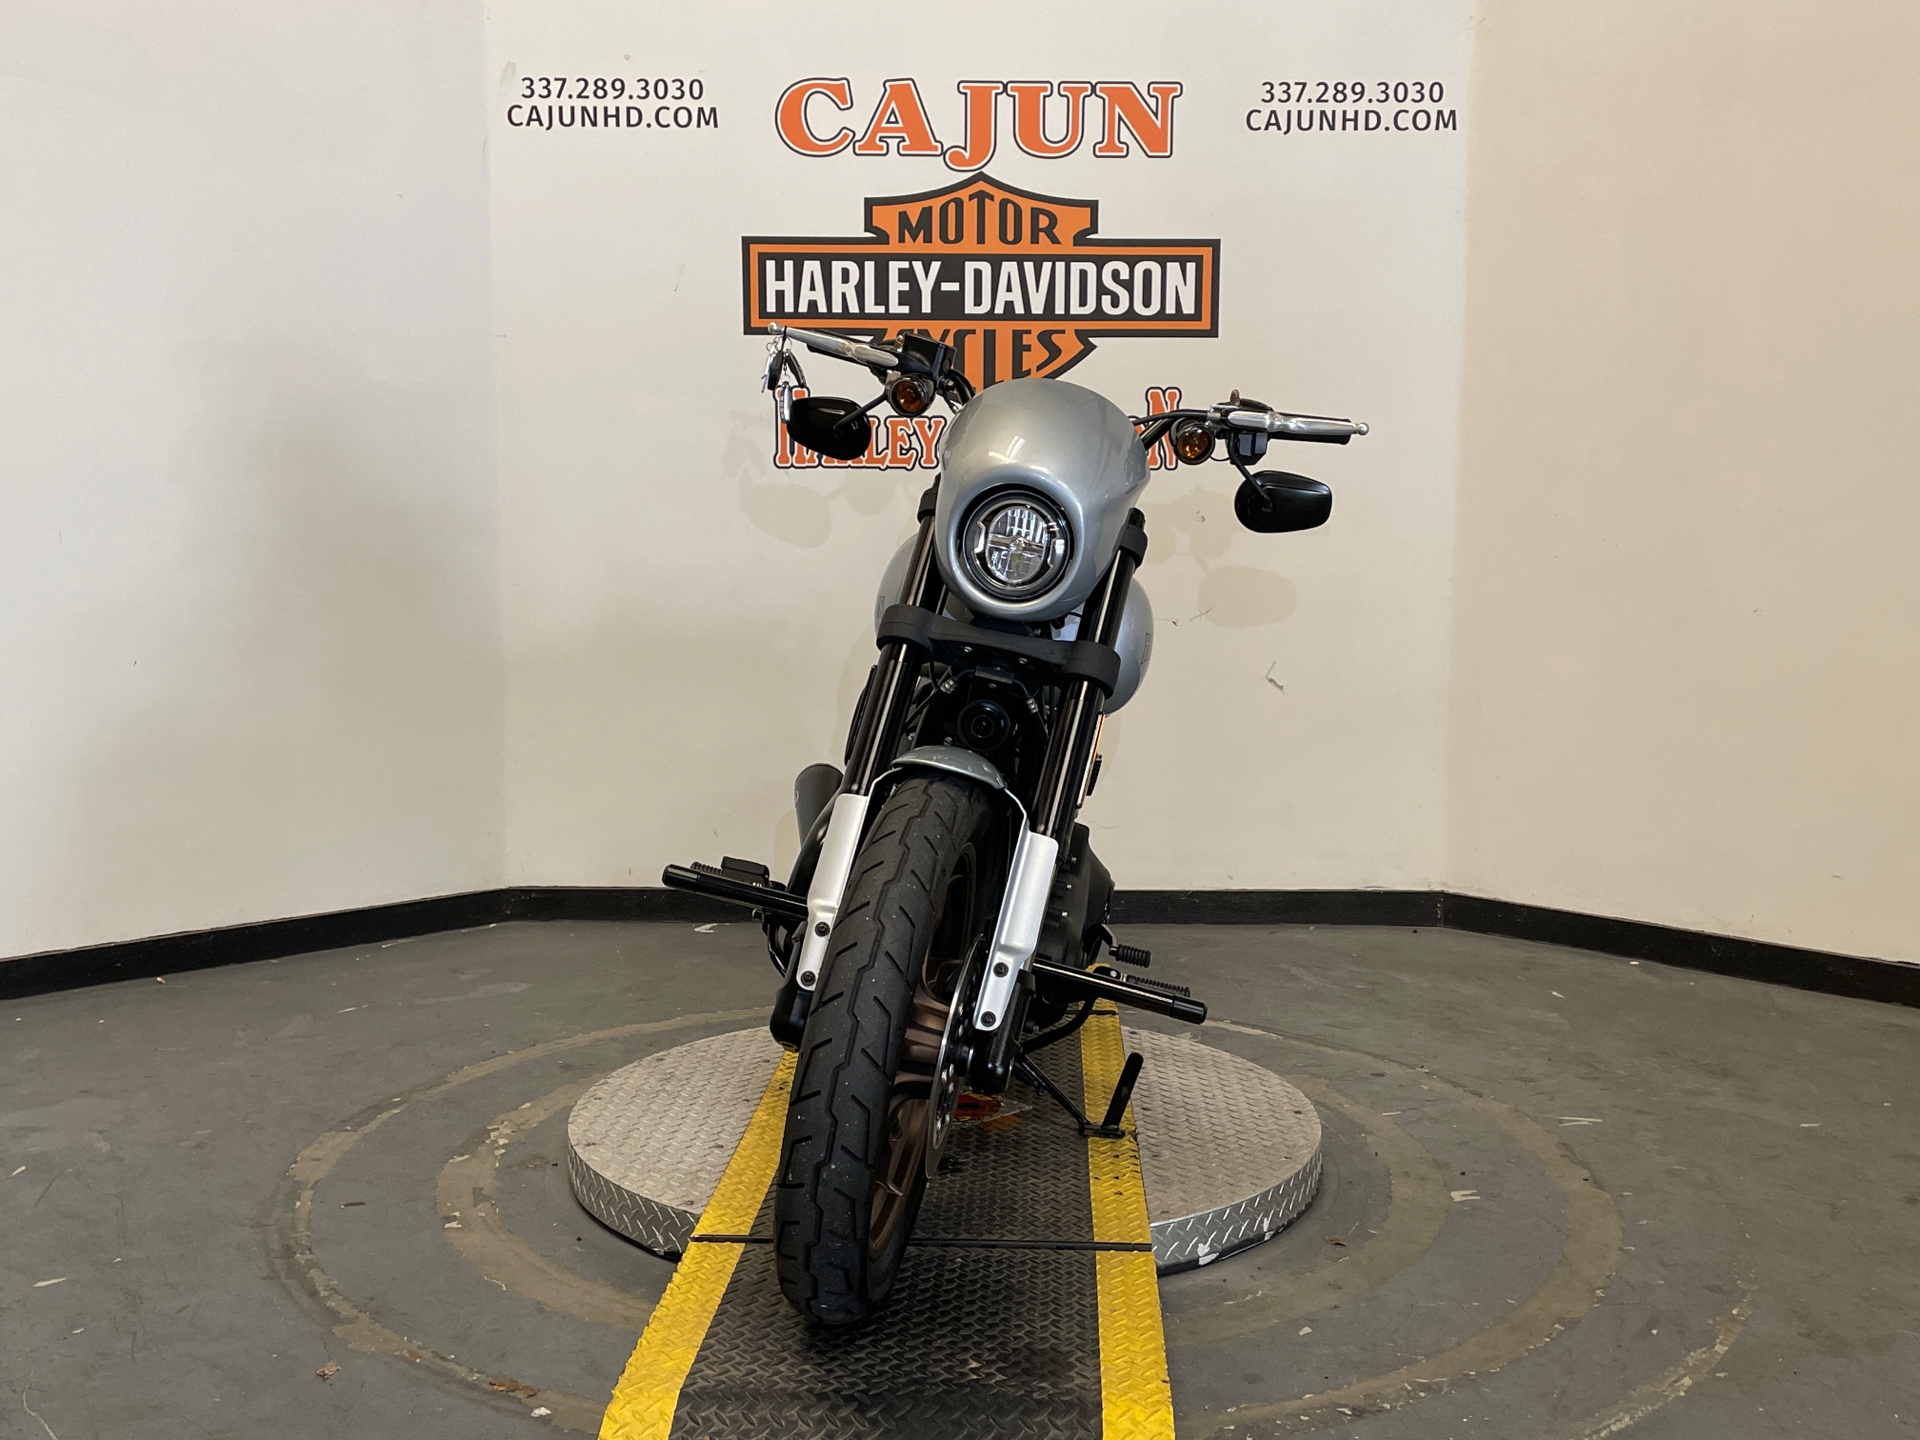 2020 Harley-Davidson Low Rider near me - Photo 8